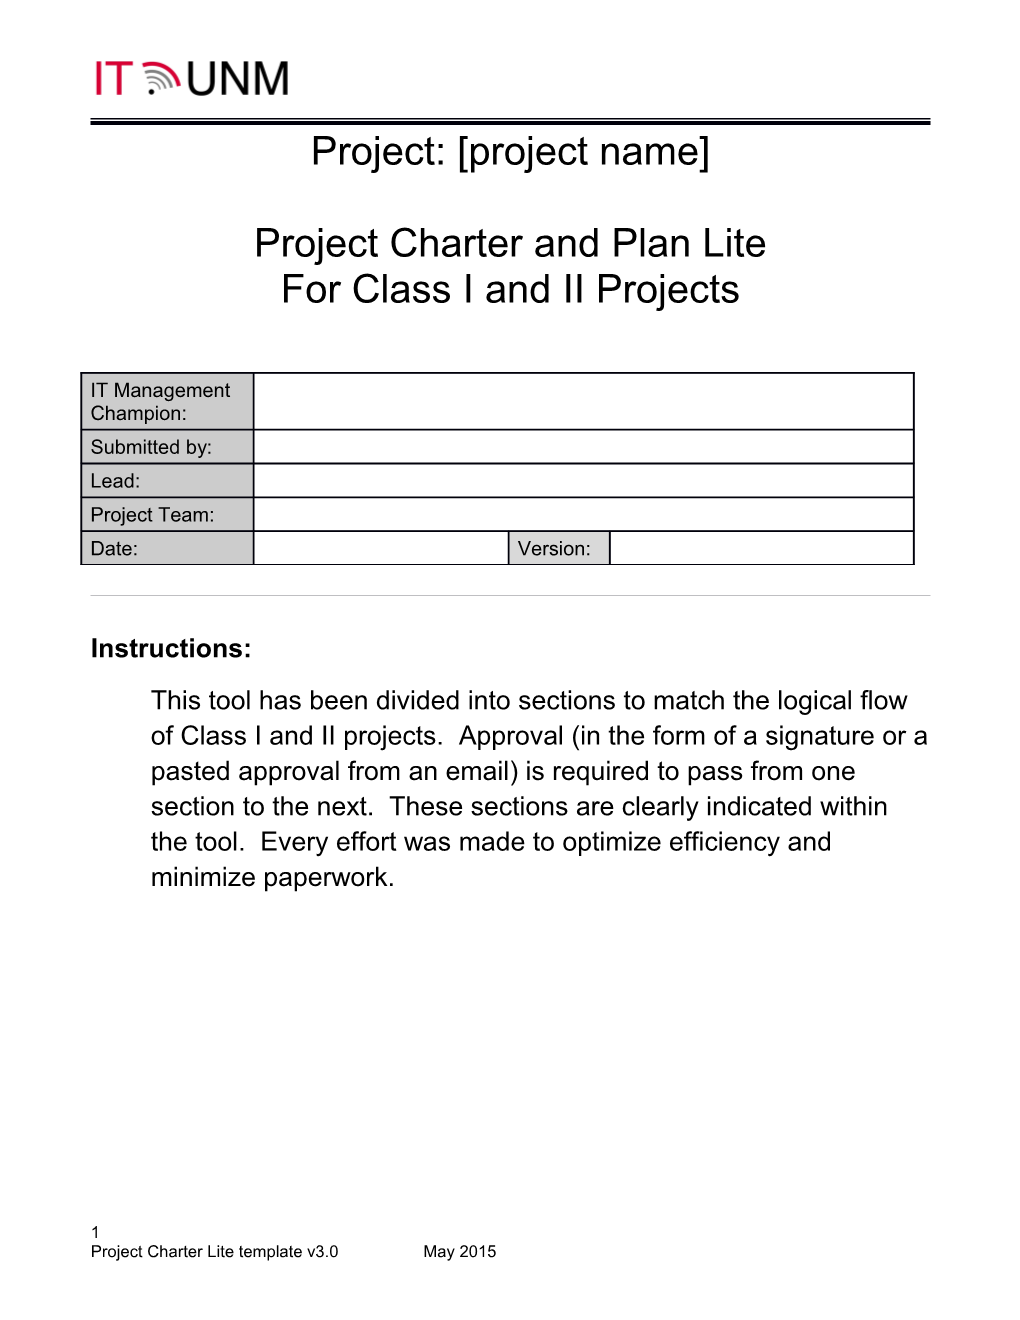 Project Charter Lite Rev 2